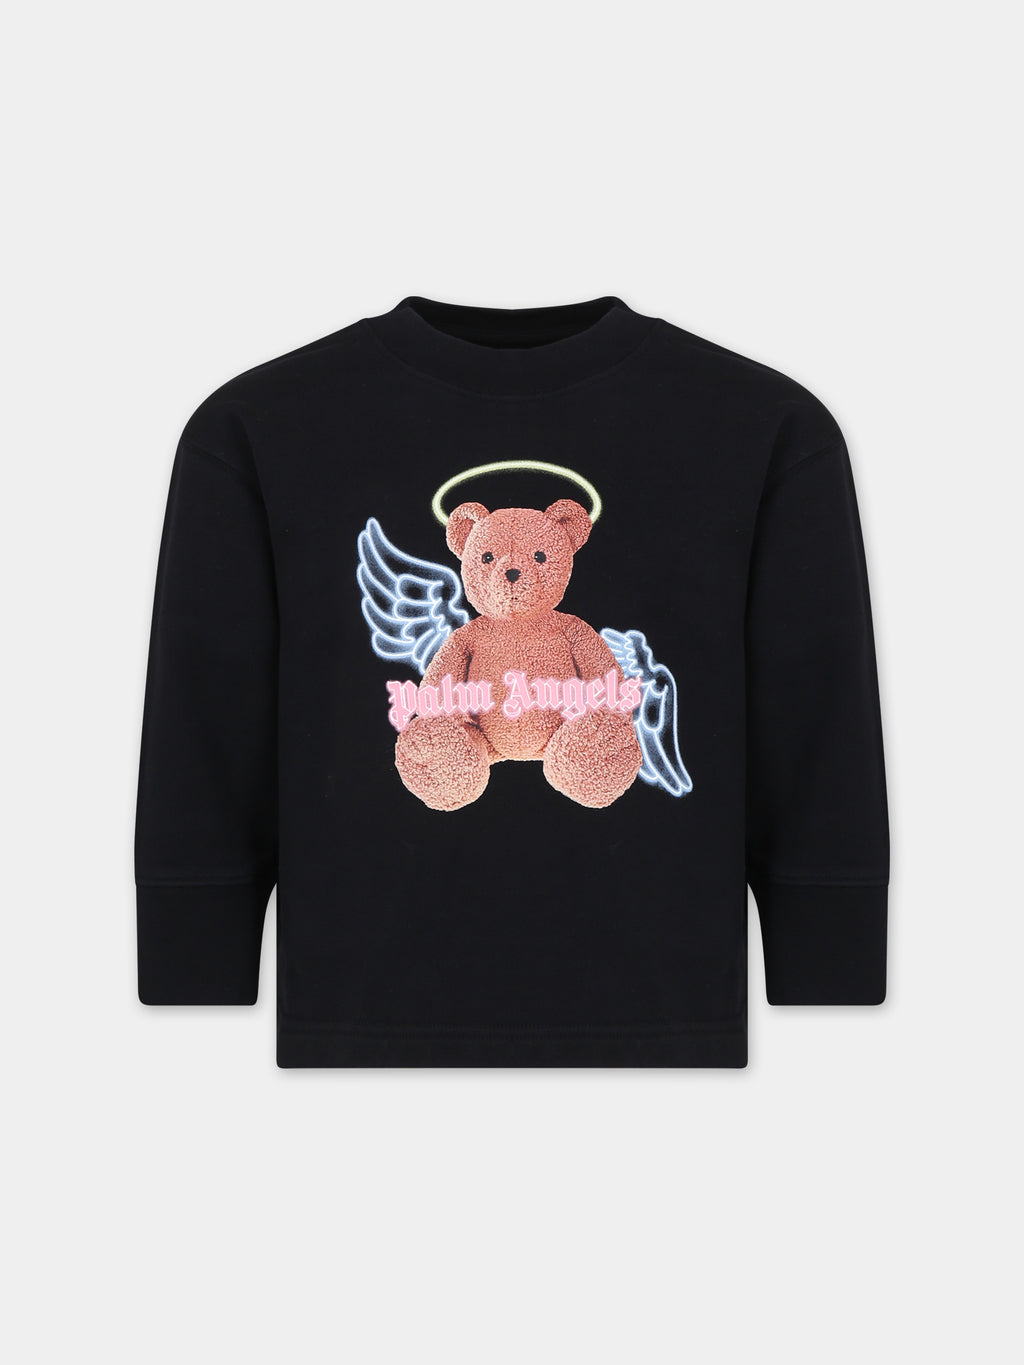 Black sweatshirt for girl with bear